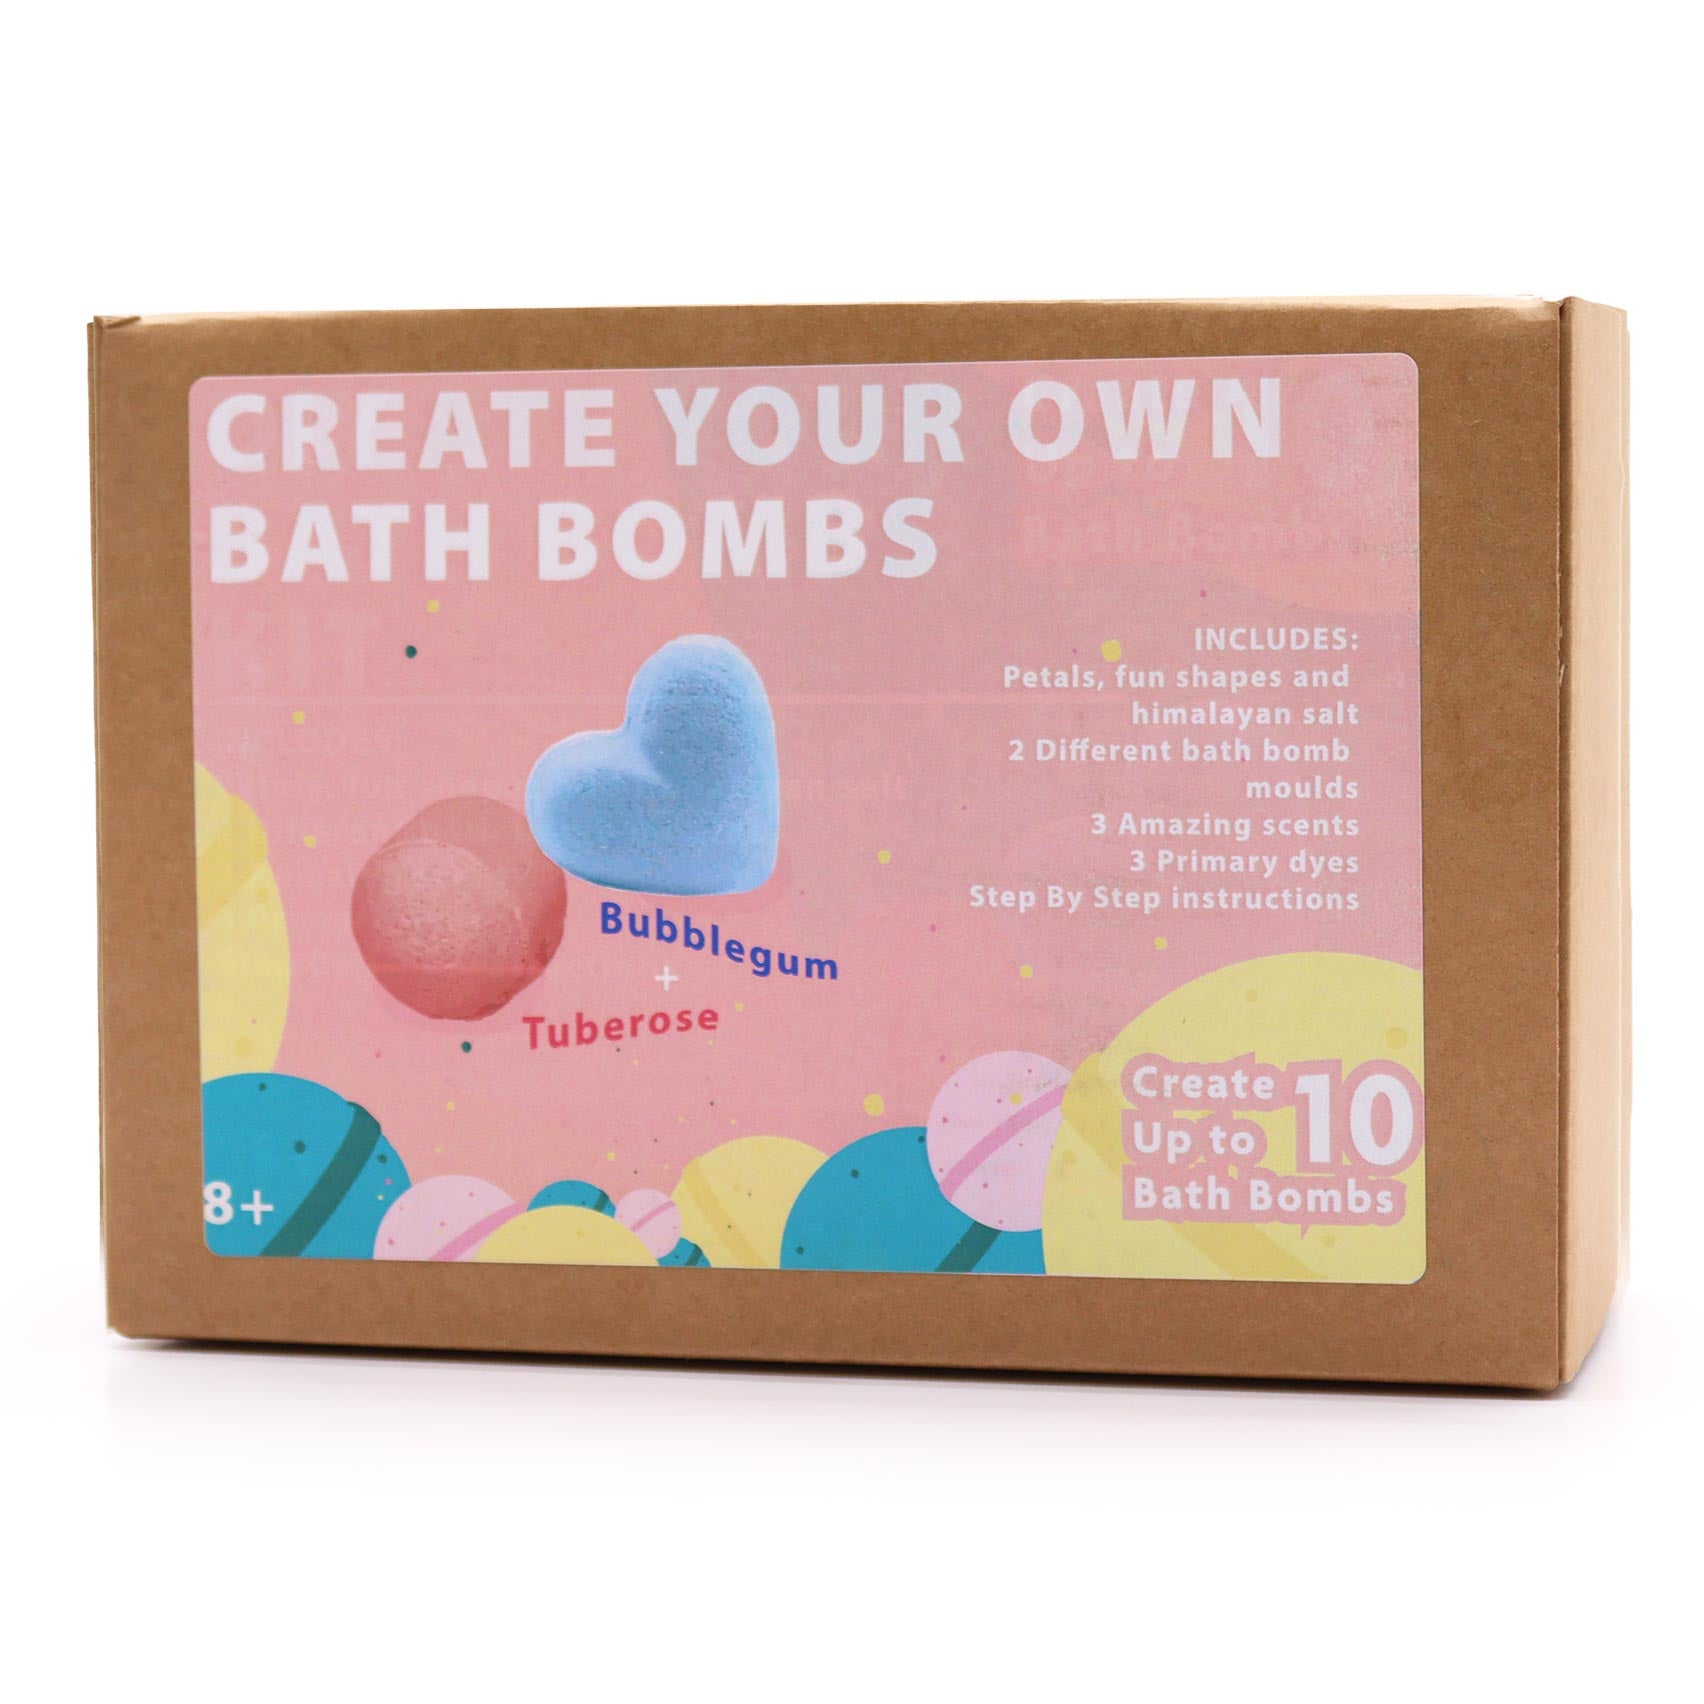 View Bath Bomb Kit Alloy Satin information